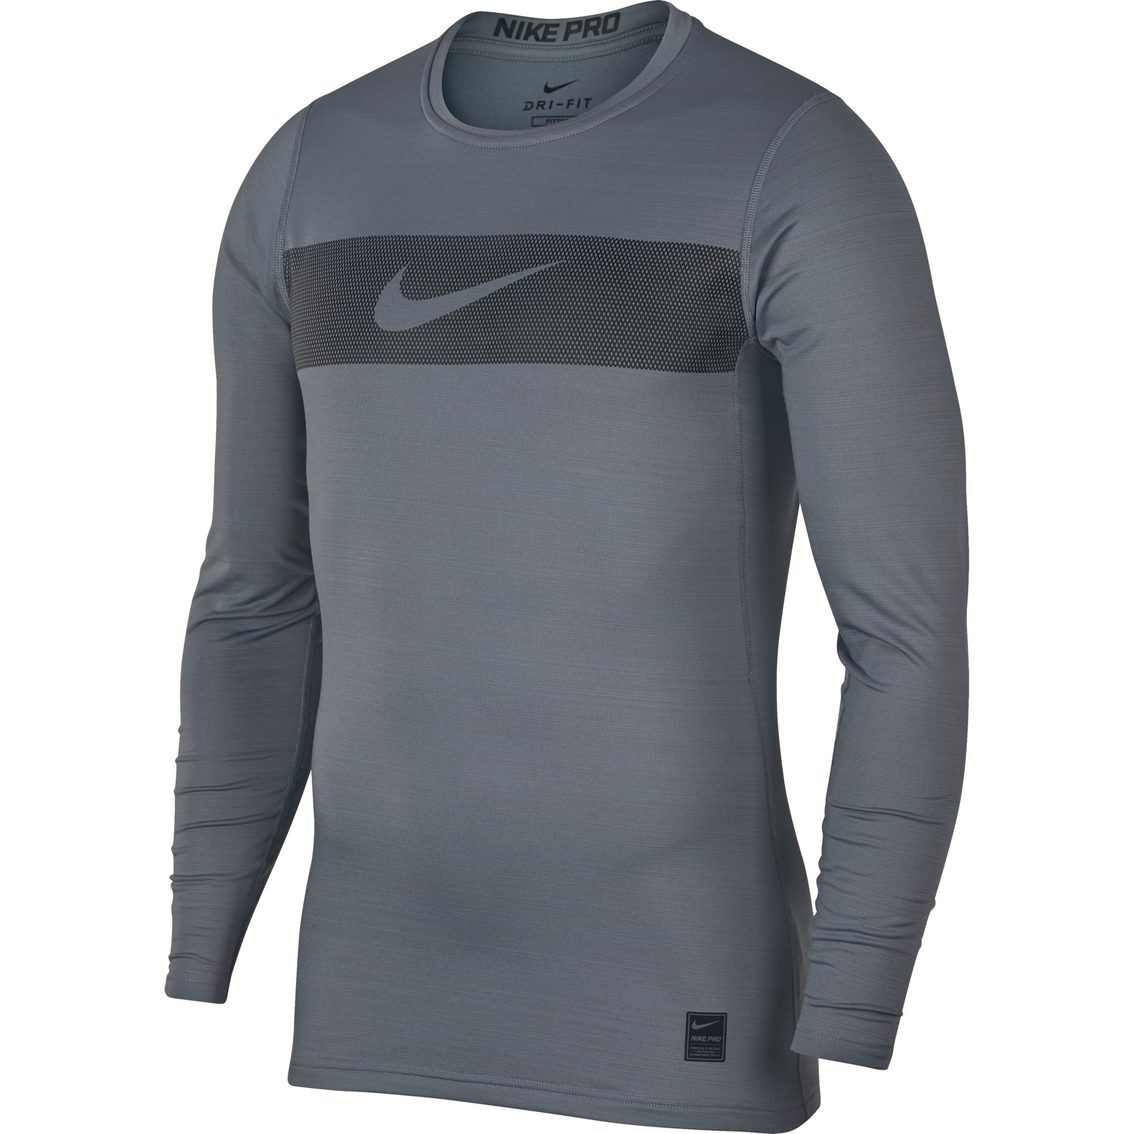 Nike Pro Warm Gfx Top | Shirts | Father's Day Shop | Shop The Exchange